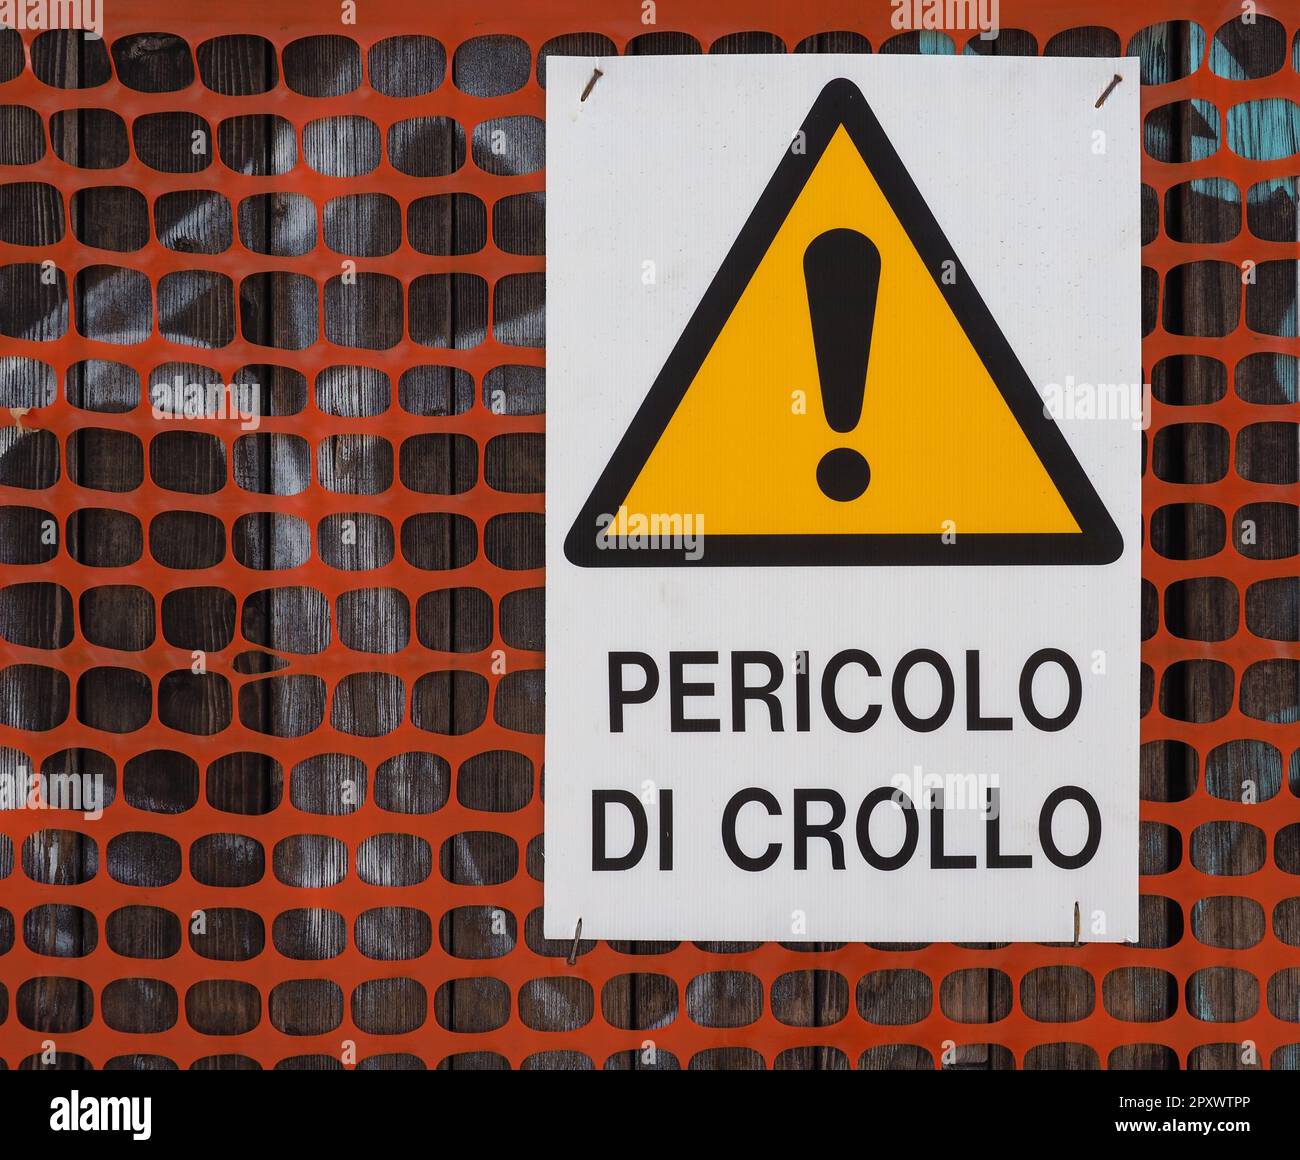 Pericolo di crollo translation Danger of collaps Italian warning sign Stock Photo